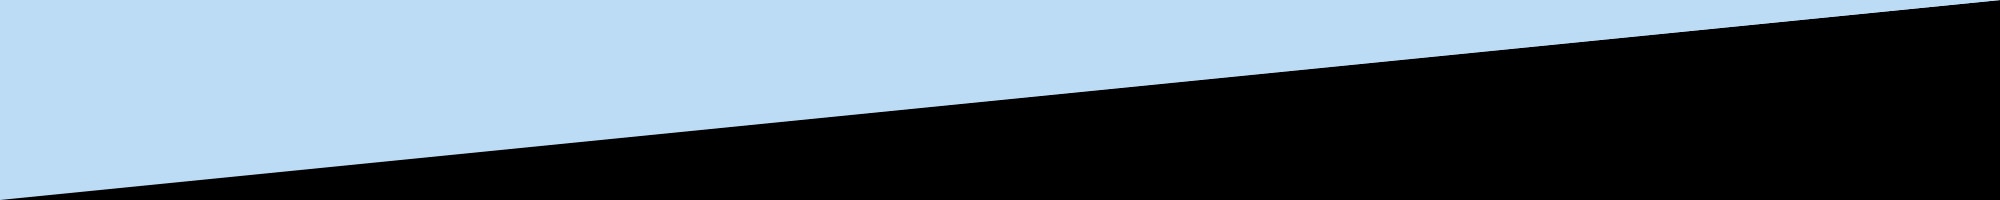 Light blue to black background image